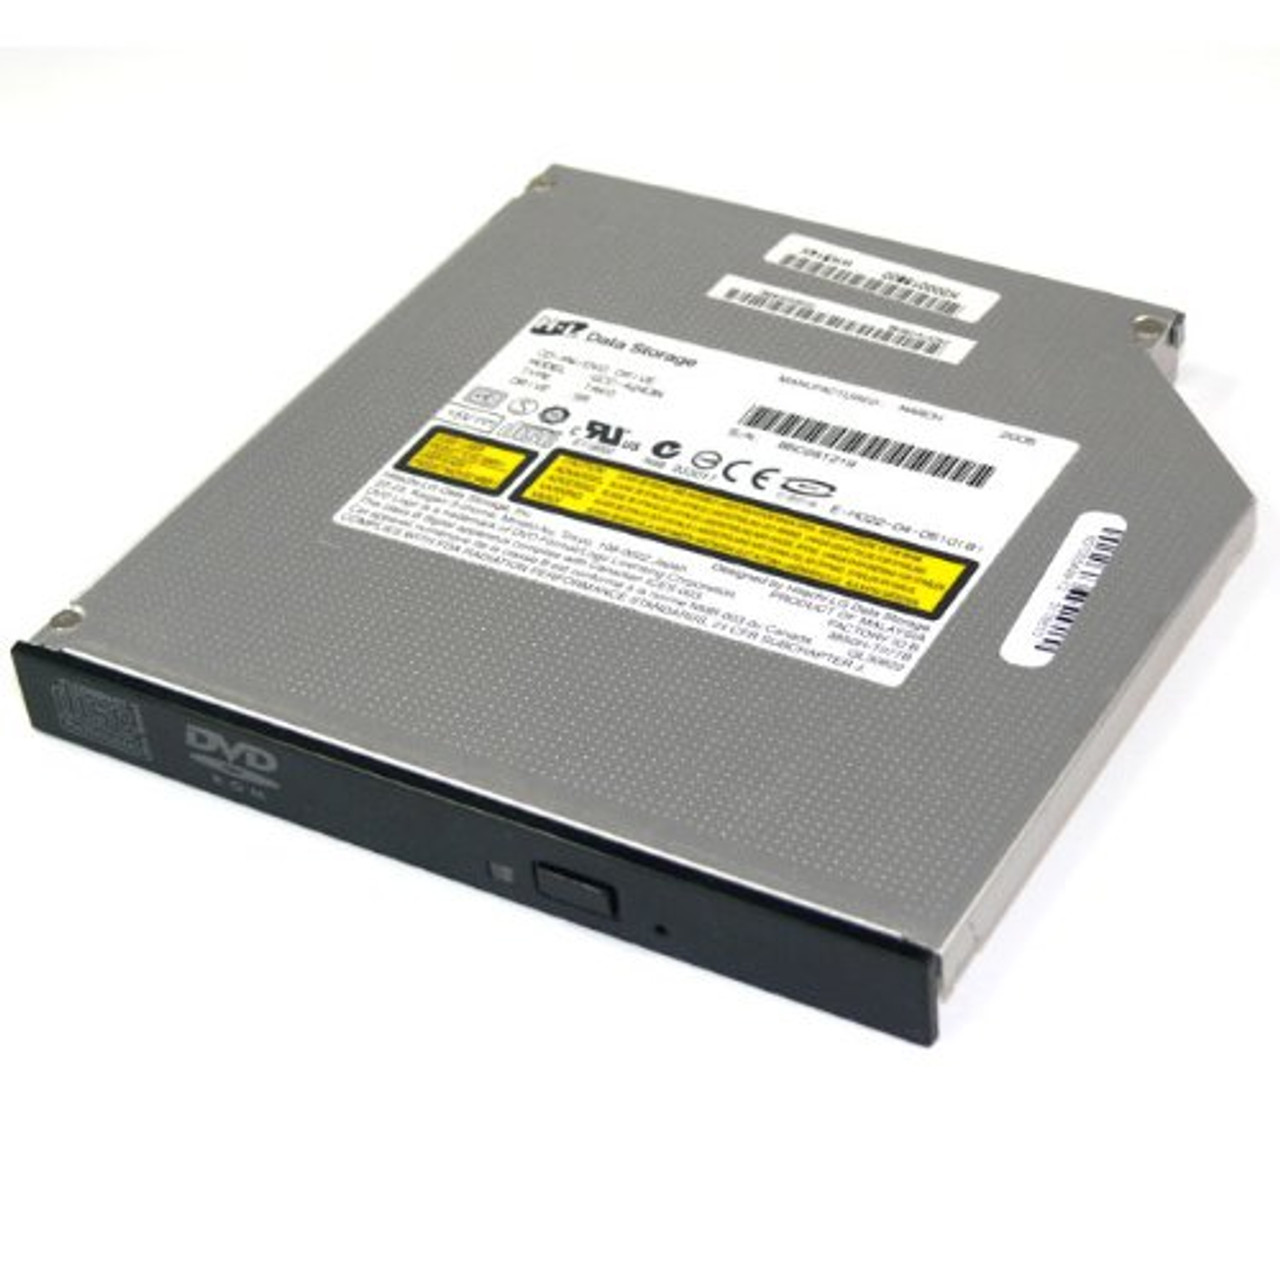 K000015800 - Toshiba K000015800 Internal CD/dvd Combo Drive - 1 x Pack - CD-RW/dvd-ROM Support - 8x Read/ - IDE - 5.25